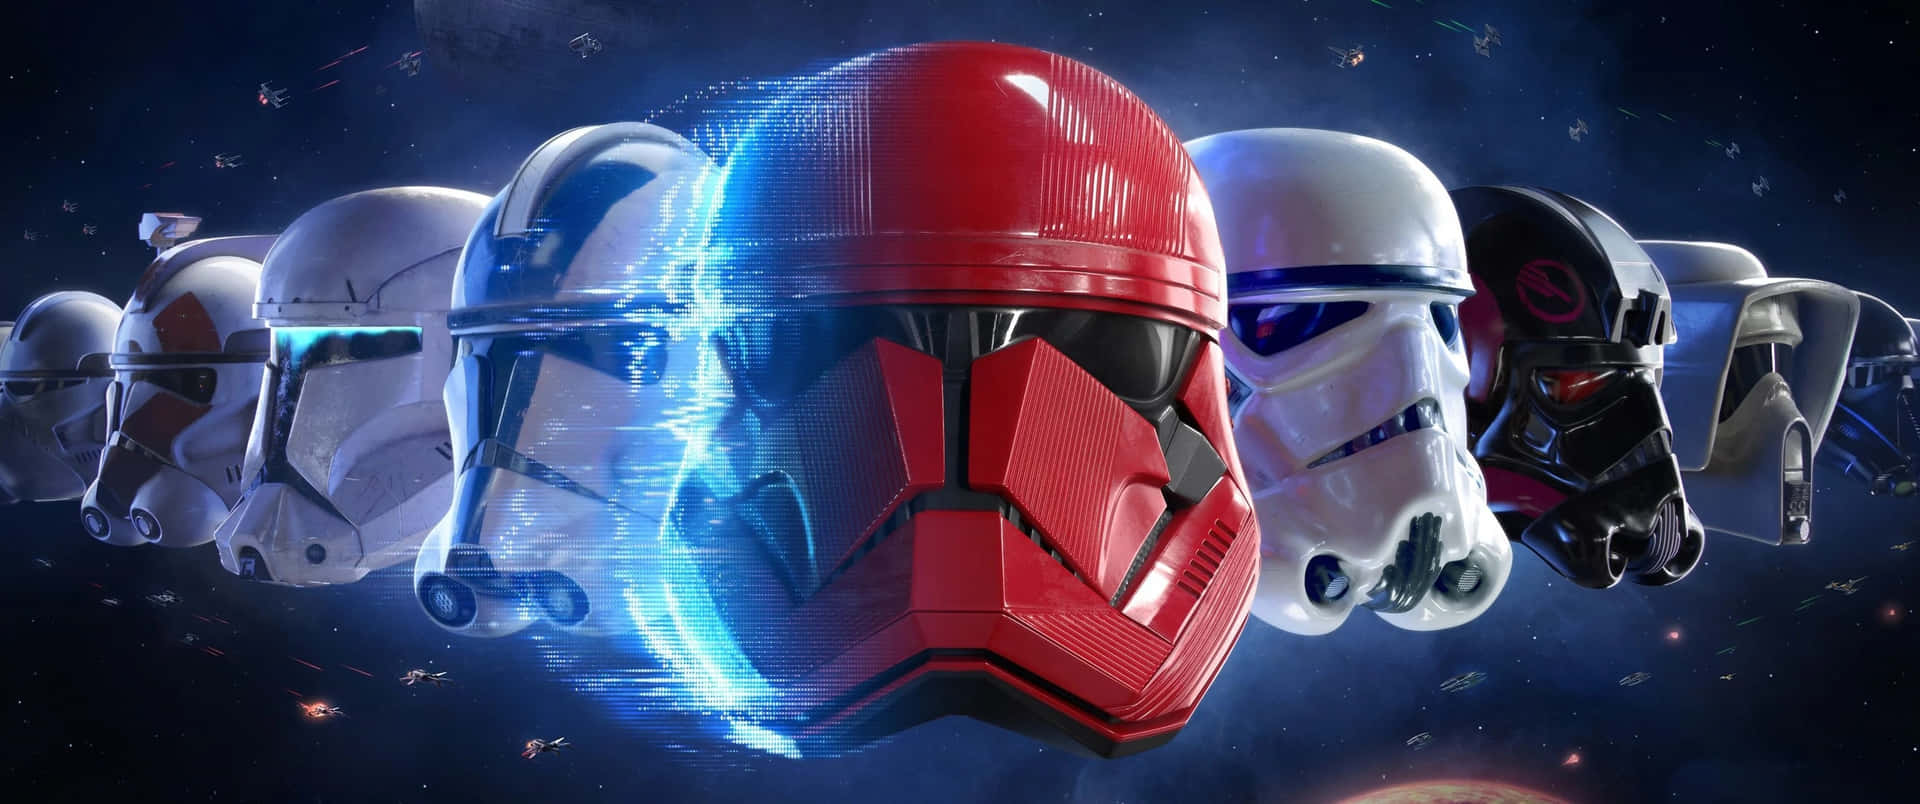 Stormtrooper Star Wars 3440x1440 Wallpaper